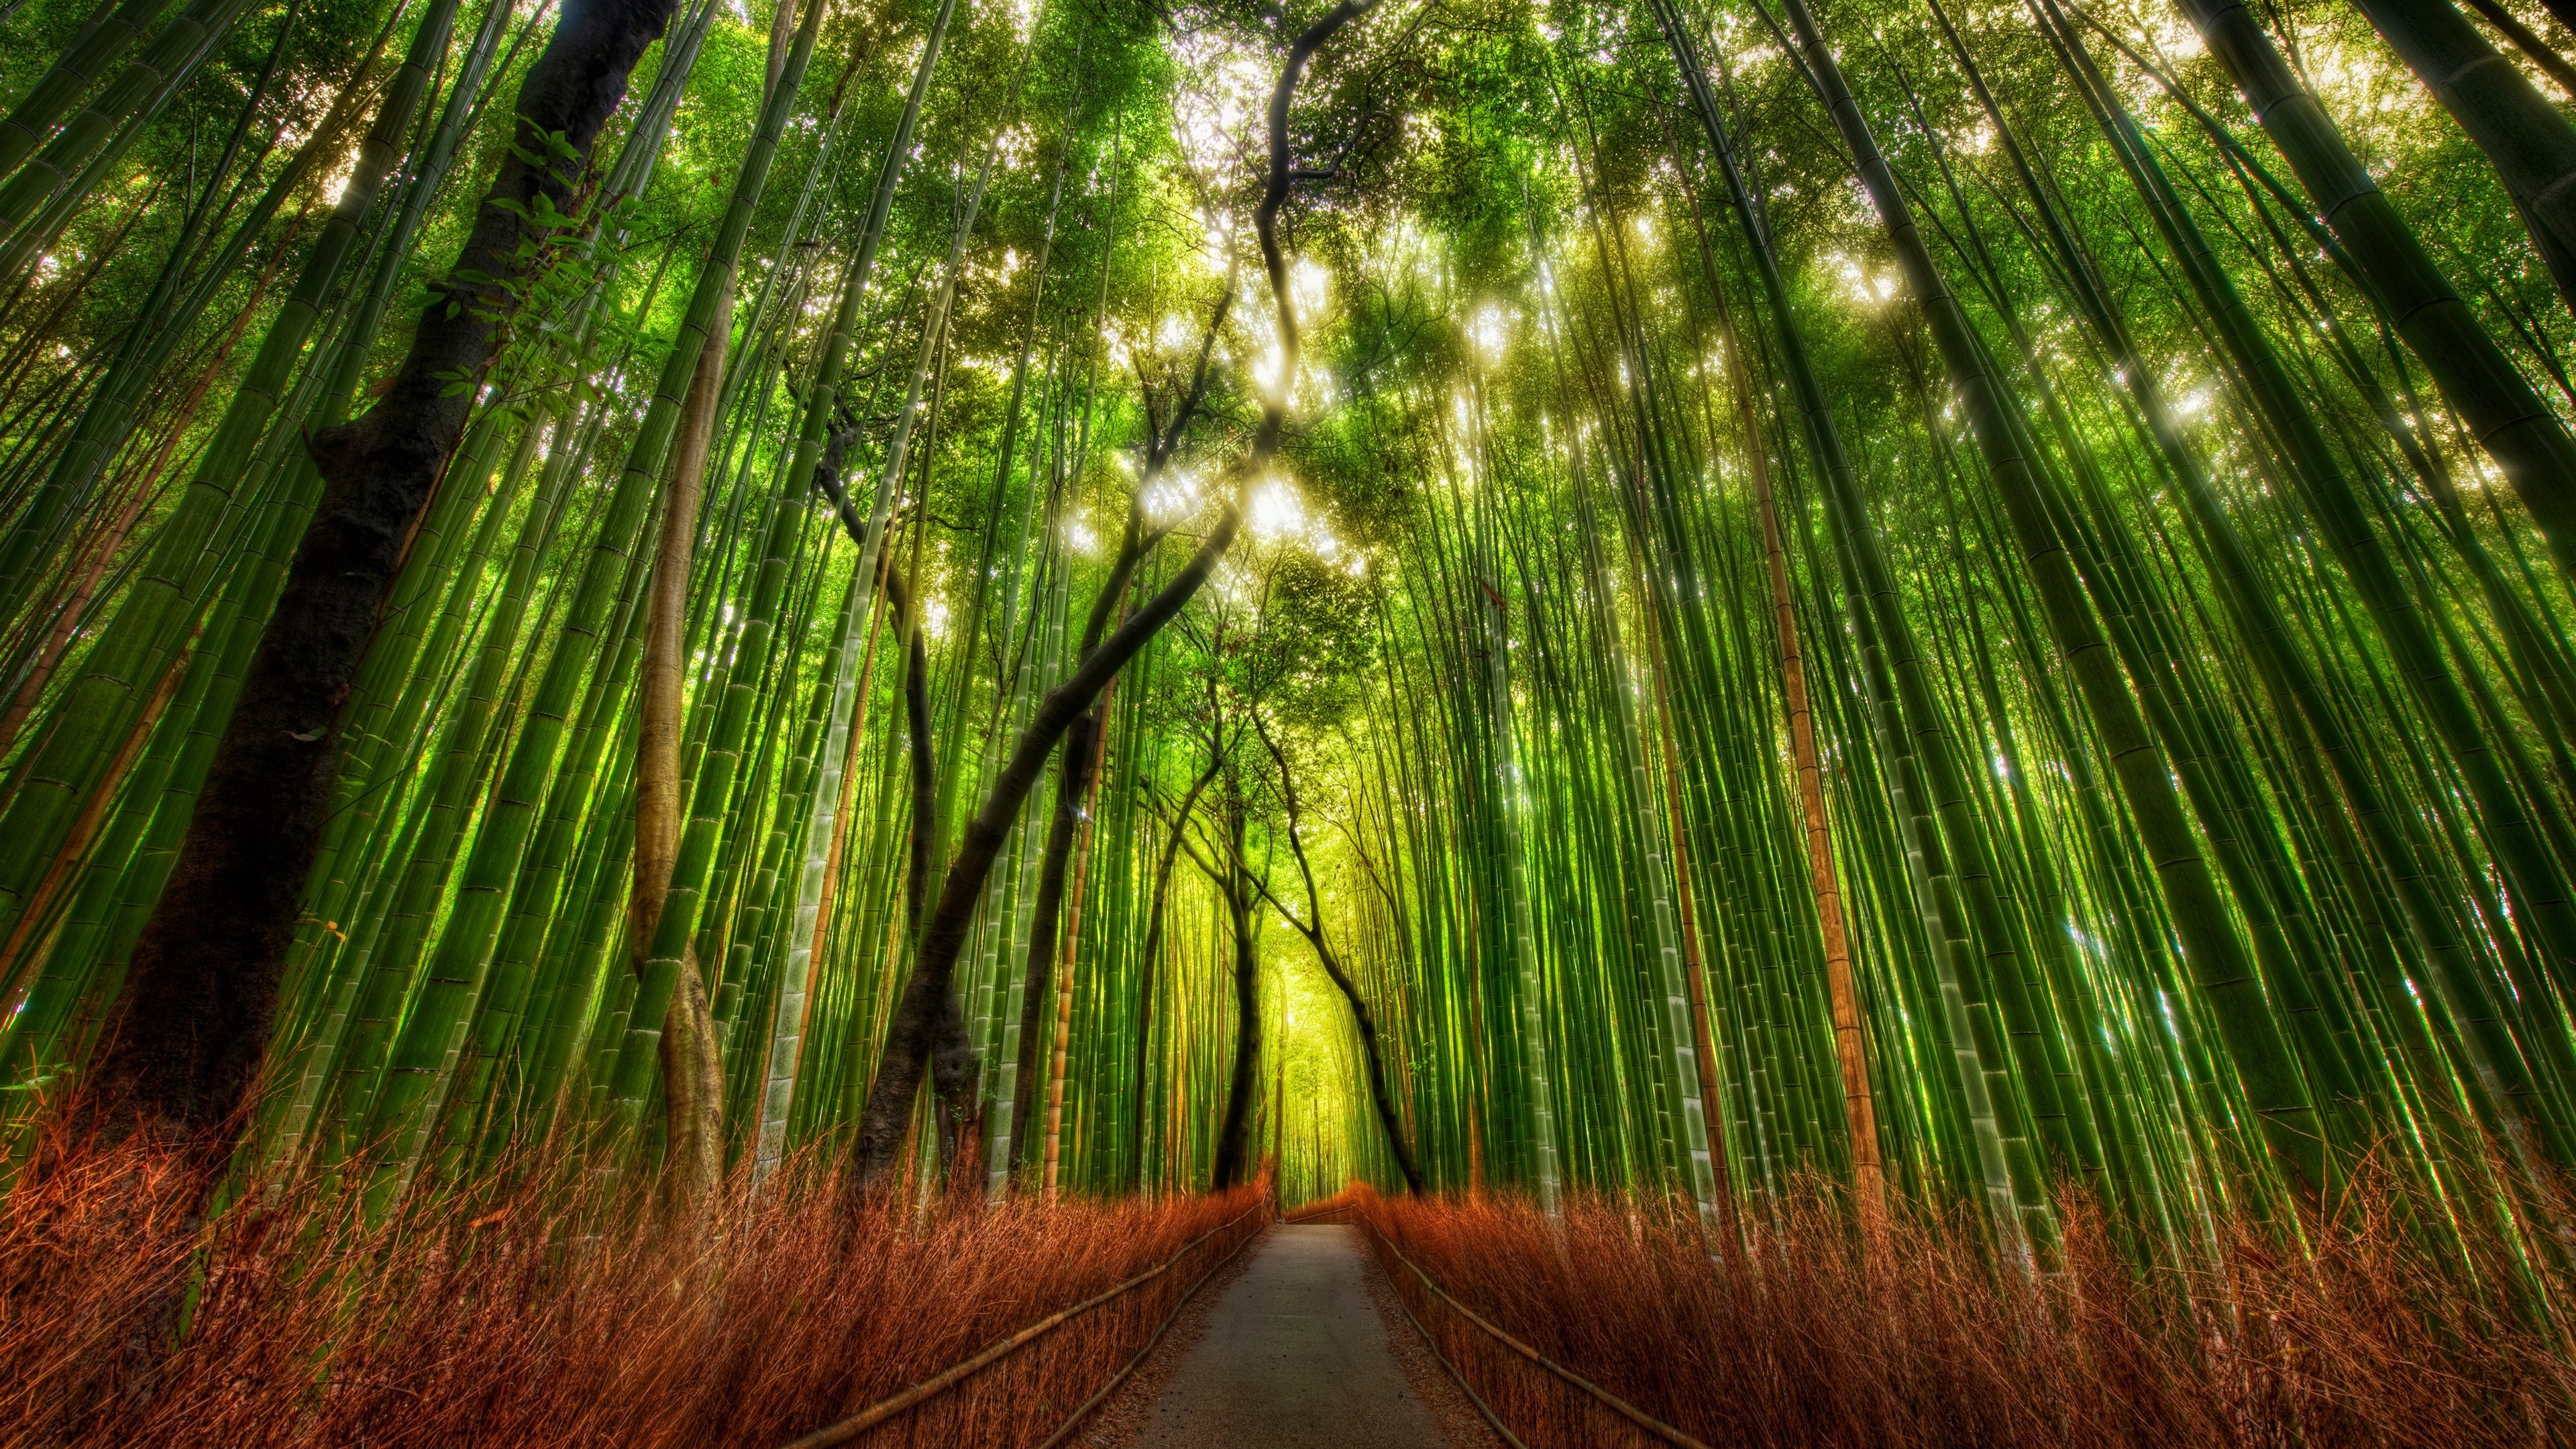 Bamboo forest wallpapers, Nature's wonder, Vibrant plants, Desktop backgrounds, 3840x2160 4K Desktop